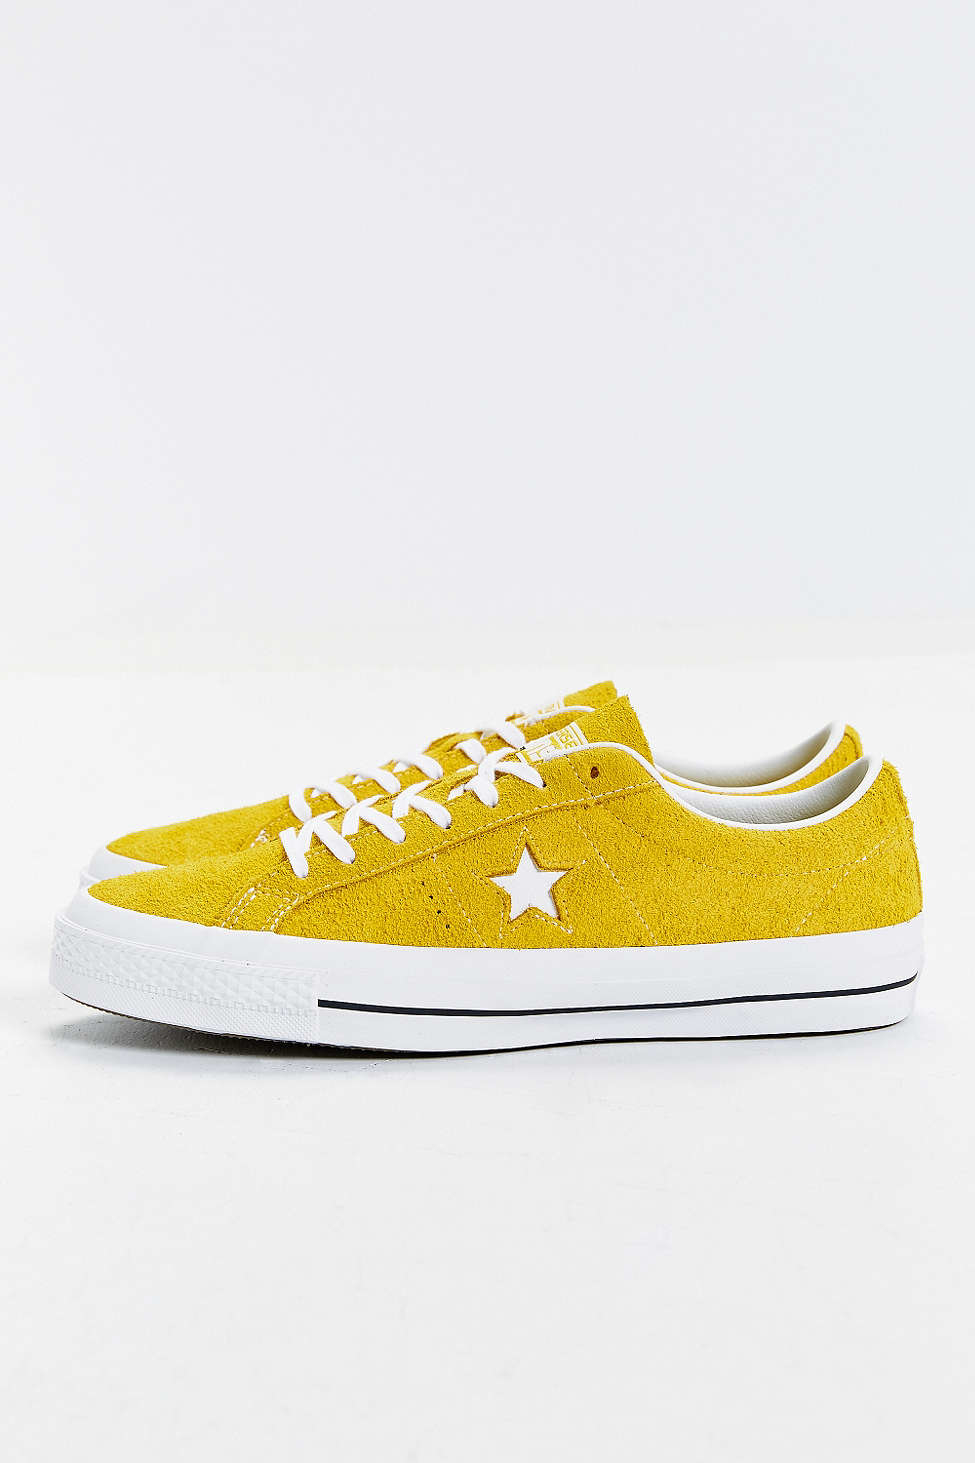 converse one star pro yellow